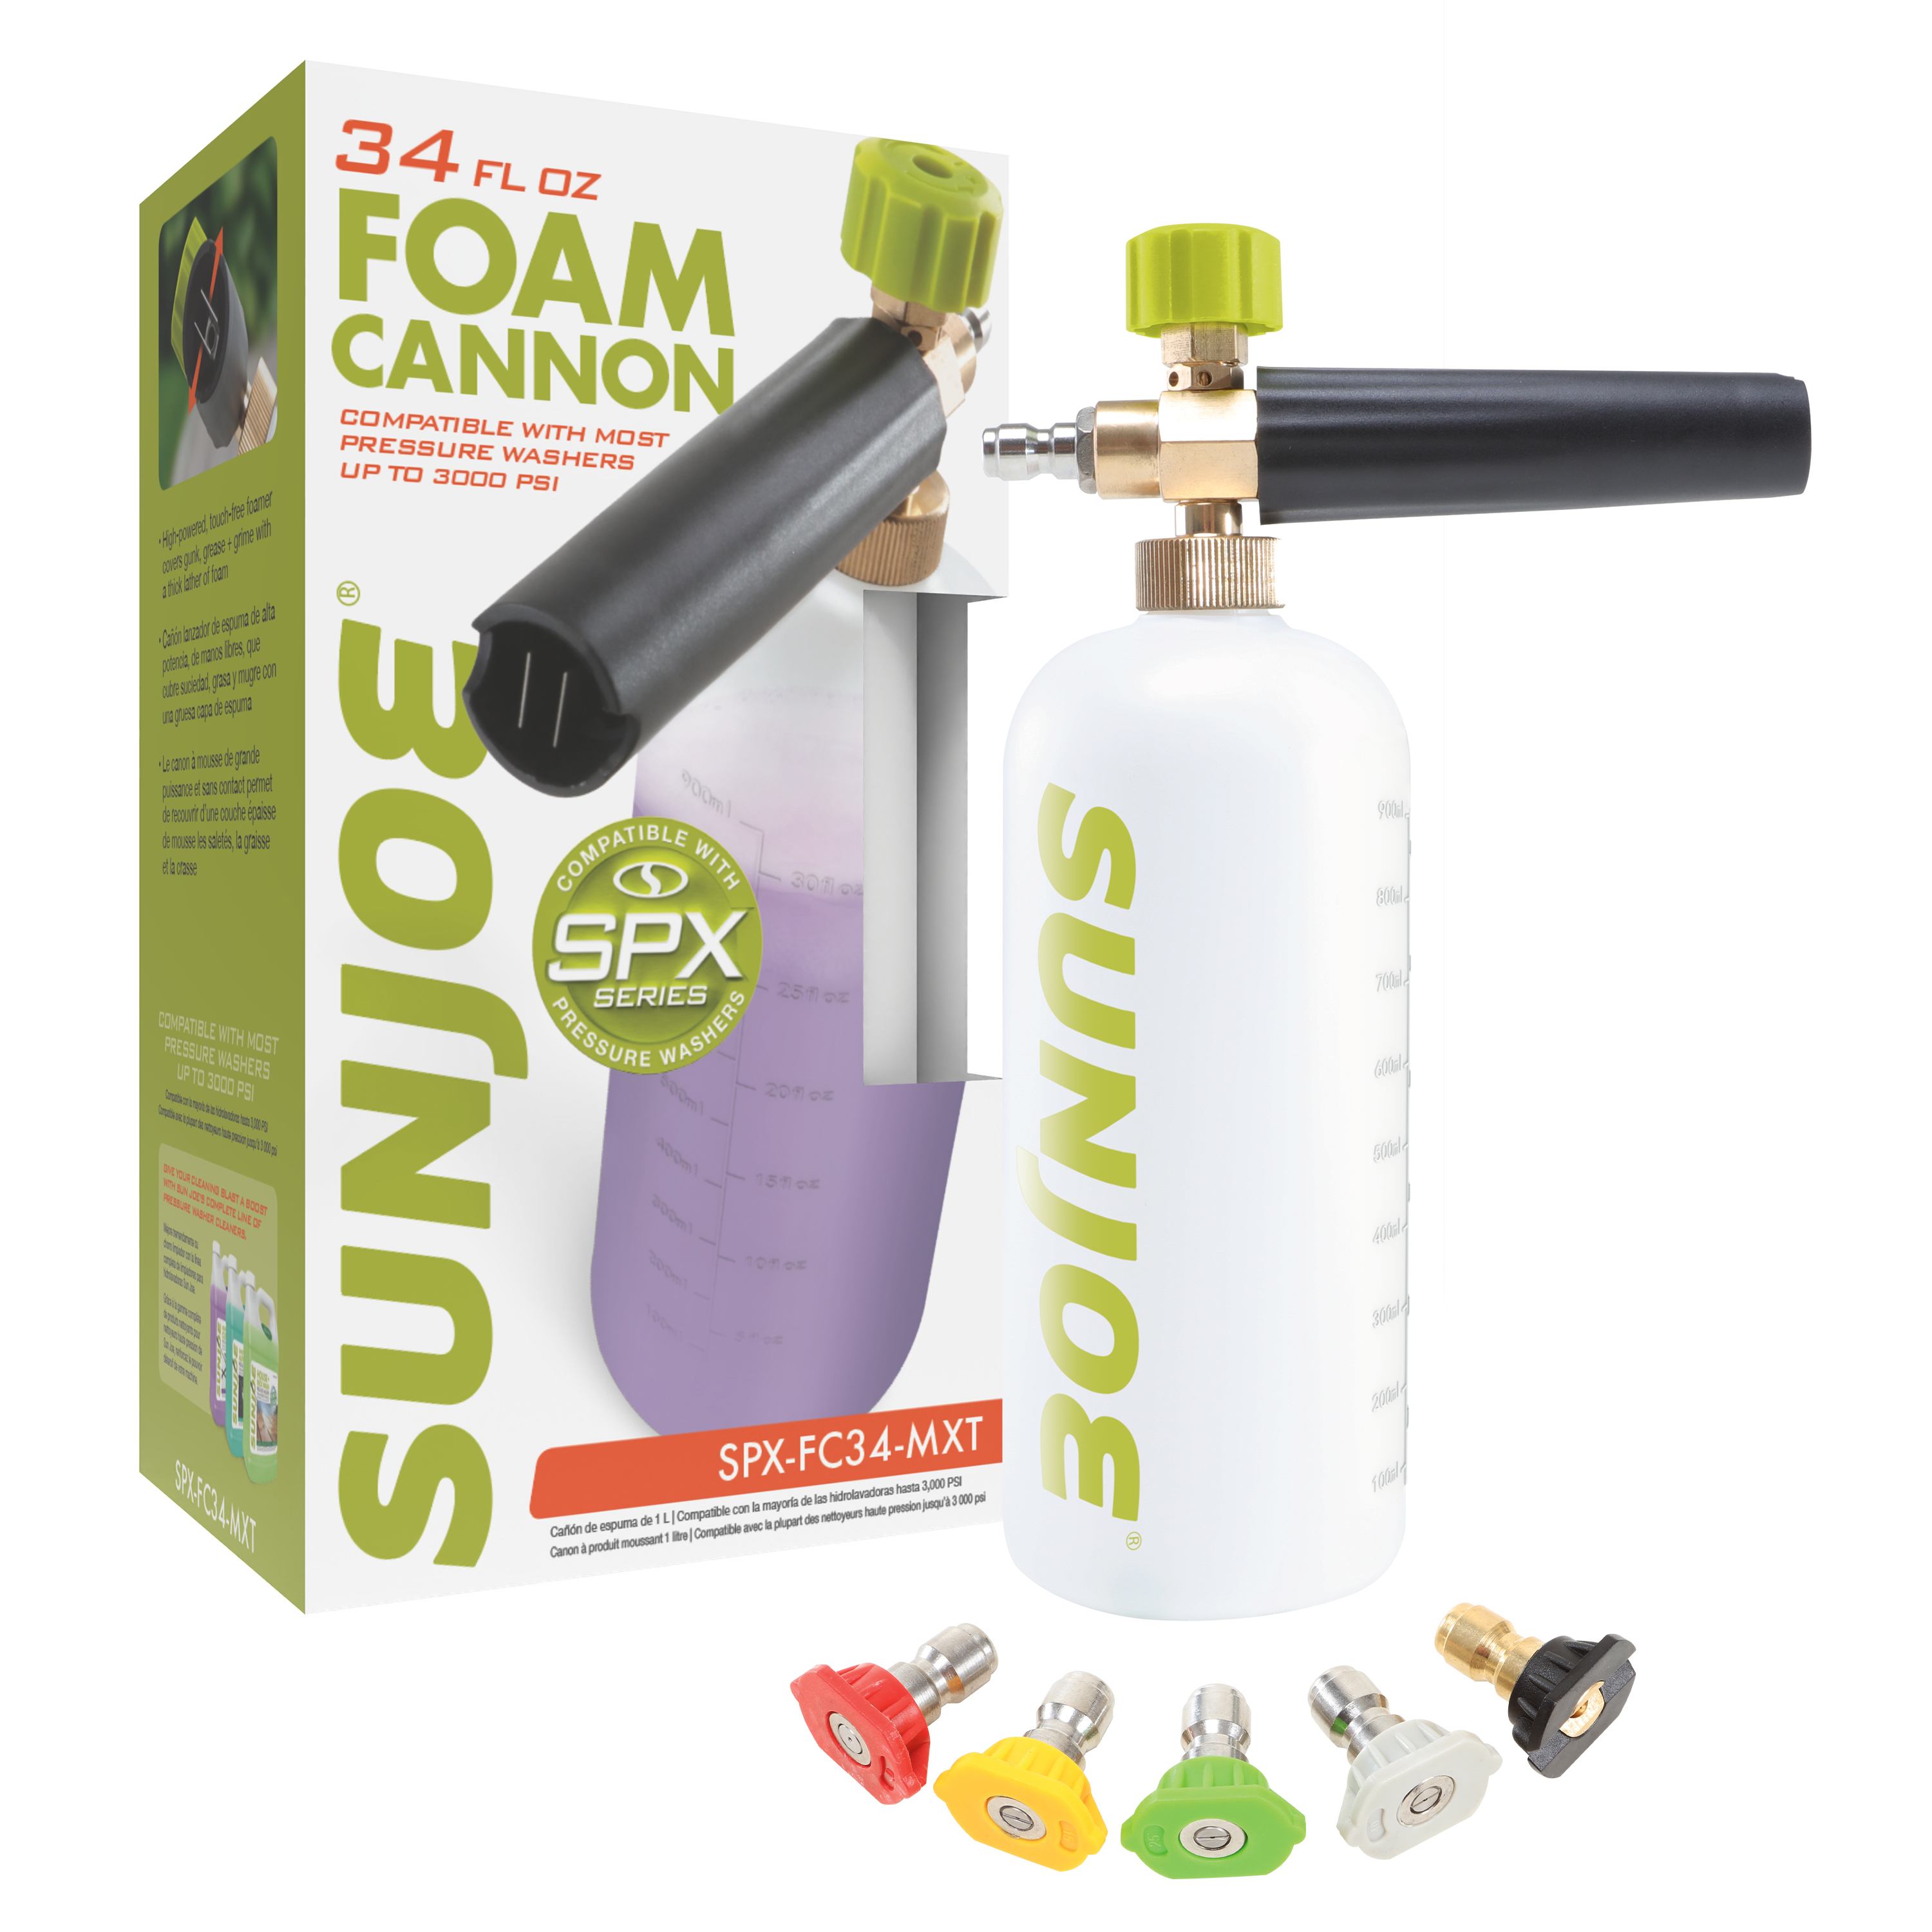 Snow Foam Cannons & Foam Soap Buyers Guide - What to buy?